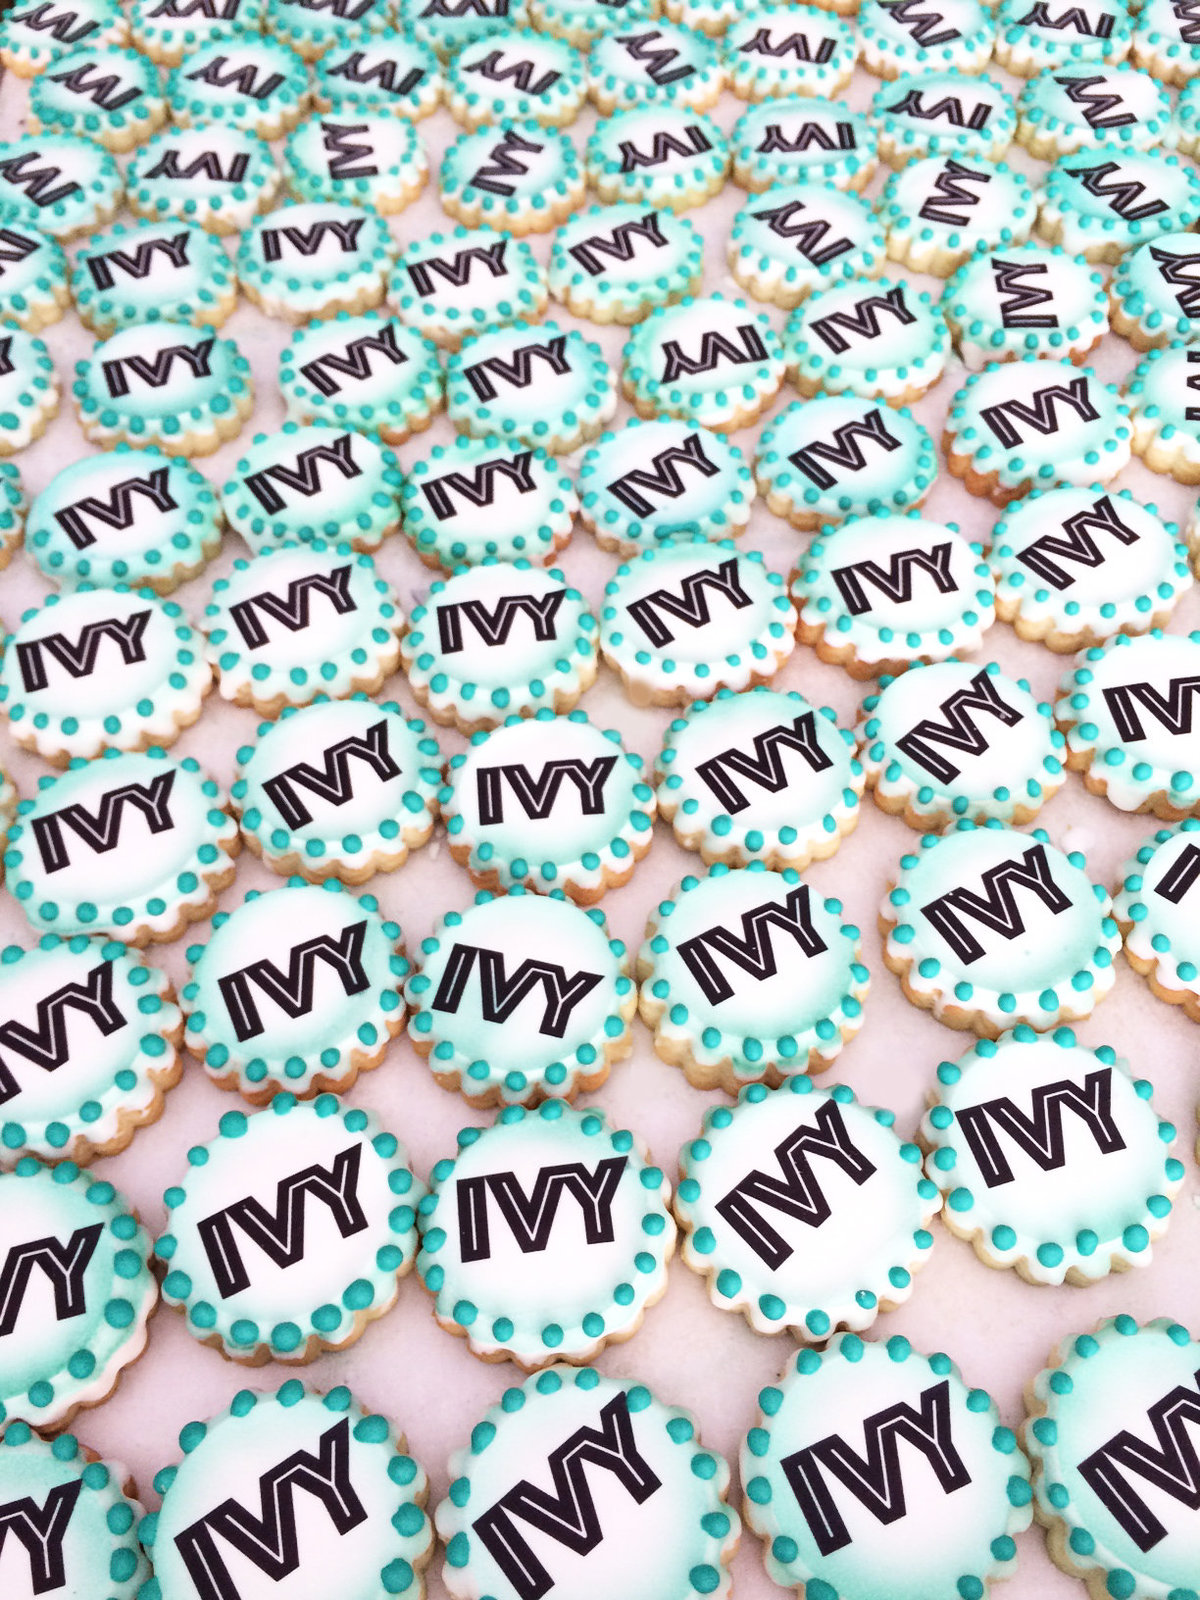 Whippt logo'd sugar cookies - Ivy 2017